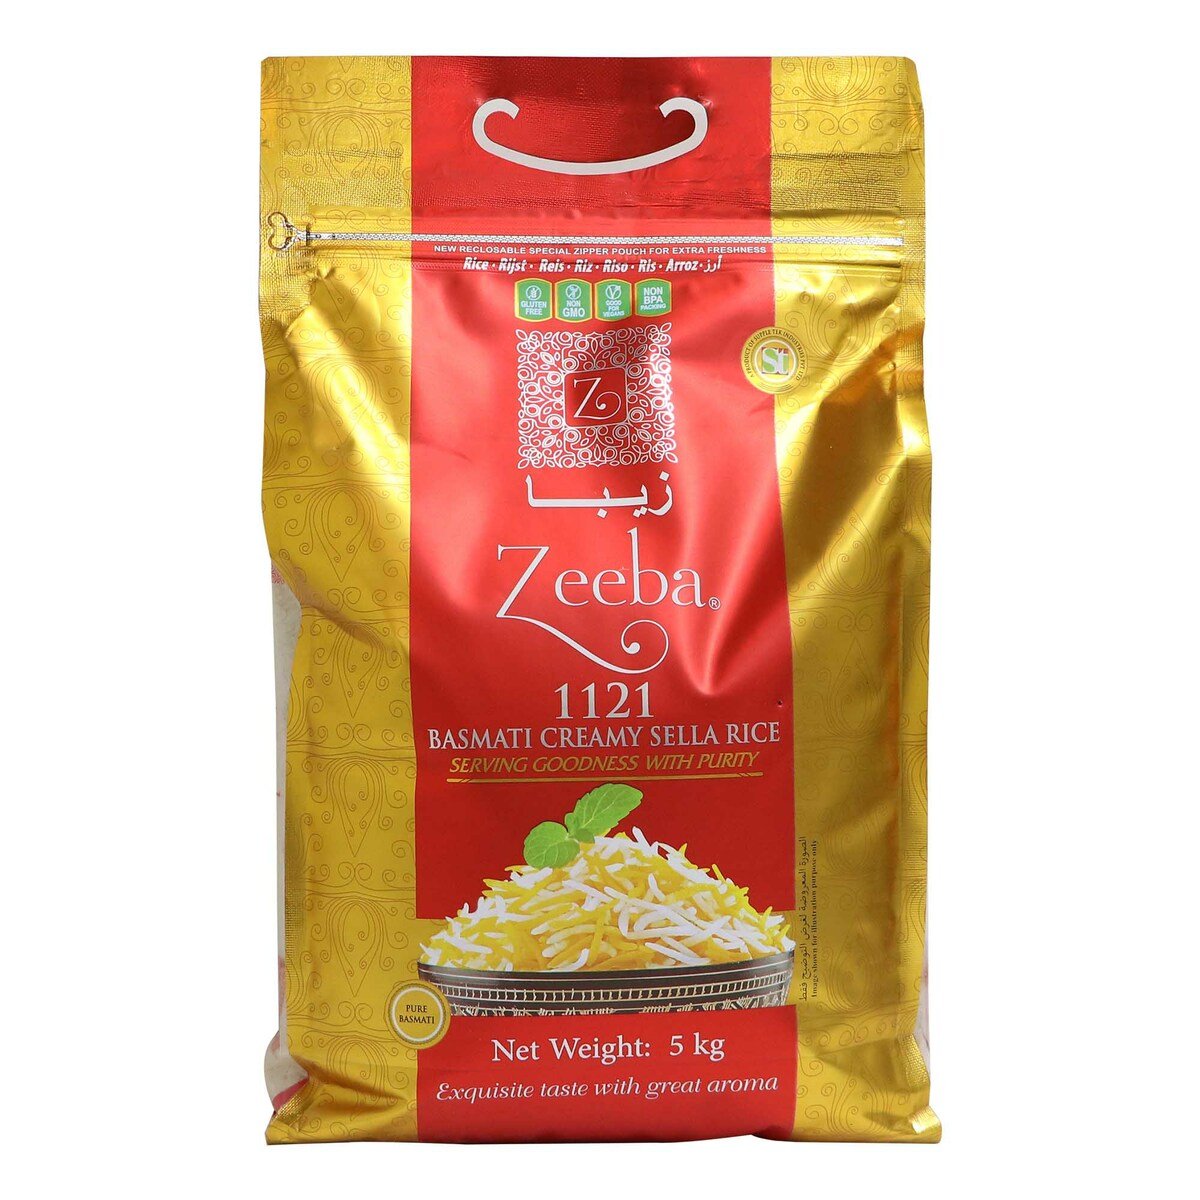 Zeeba 1121 Basmati Creamy Sella Rice 5kg